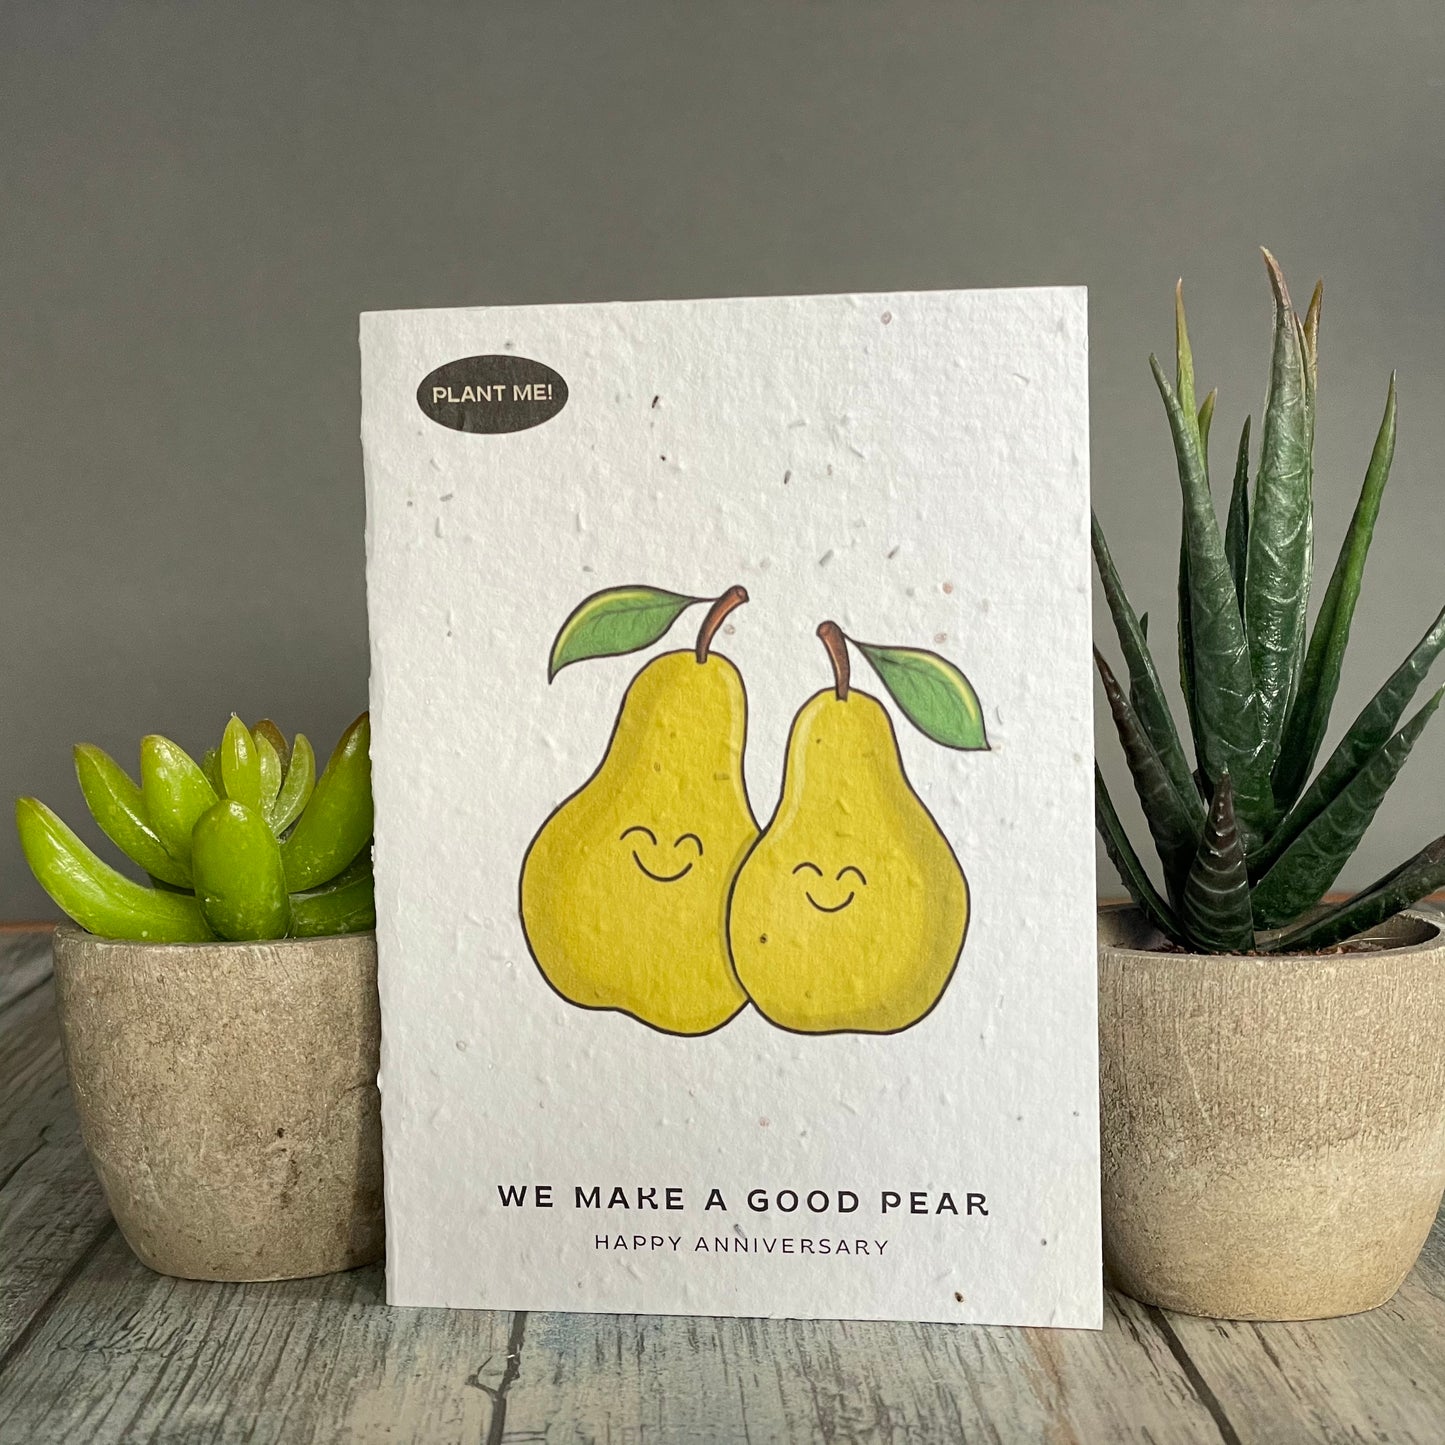 We Make a Good Pear Anniversary Greeting Card